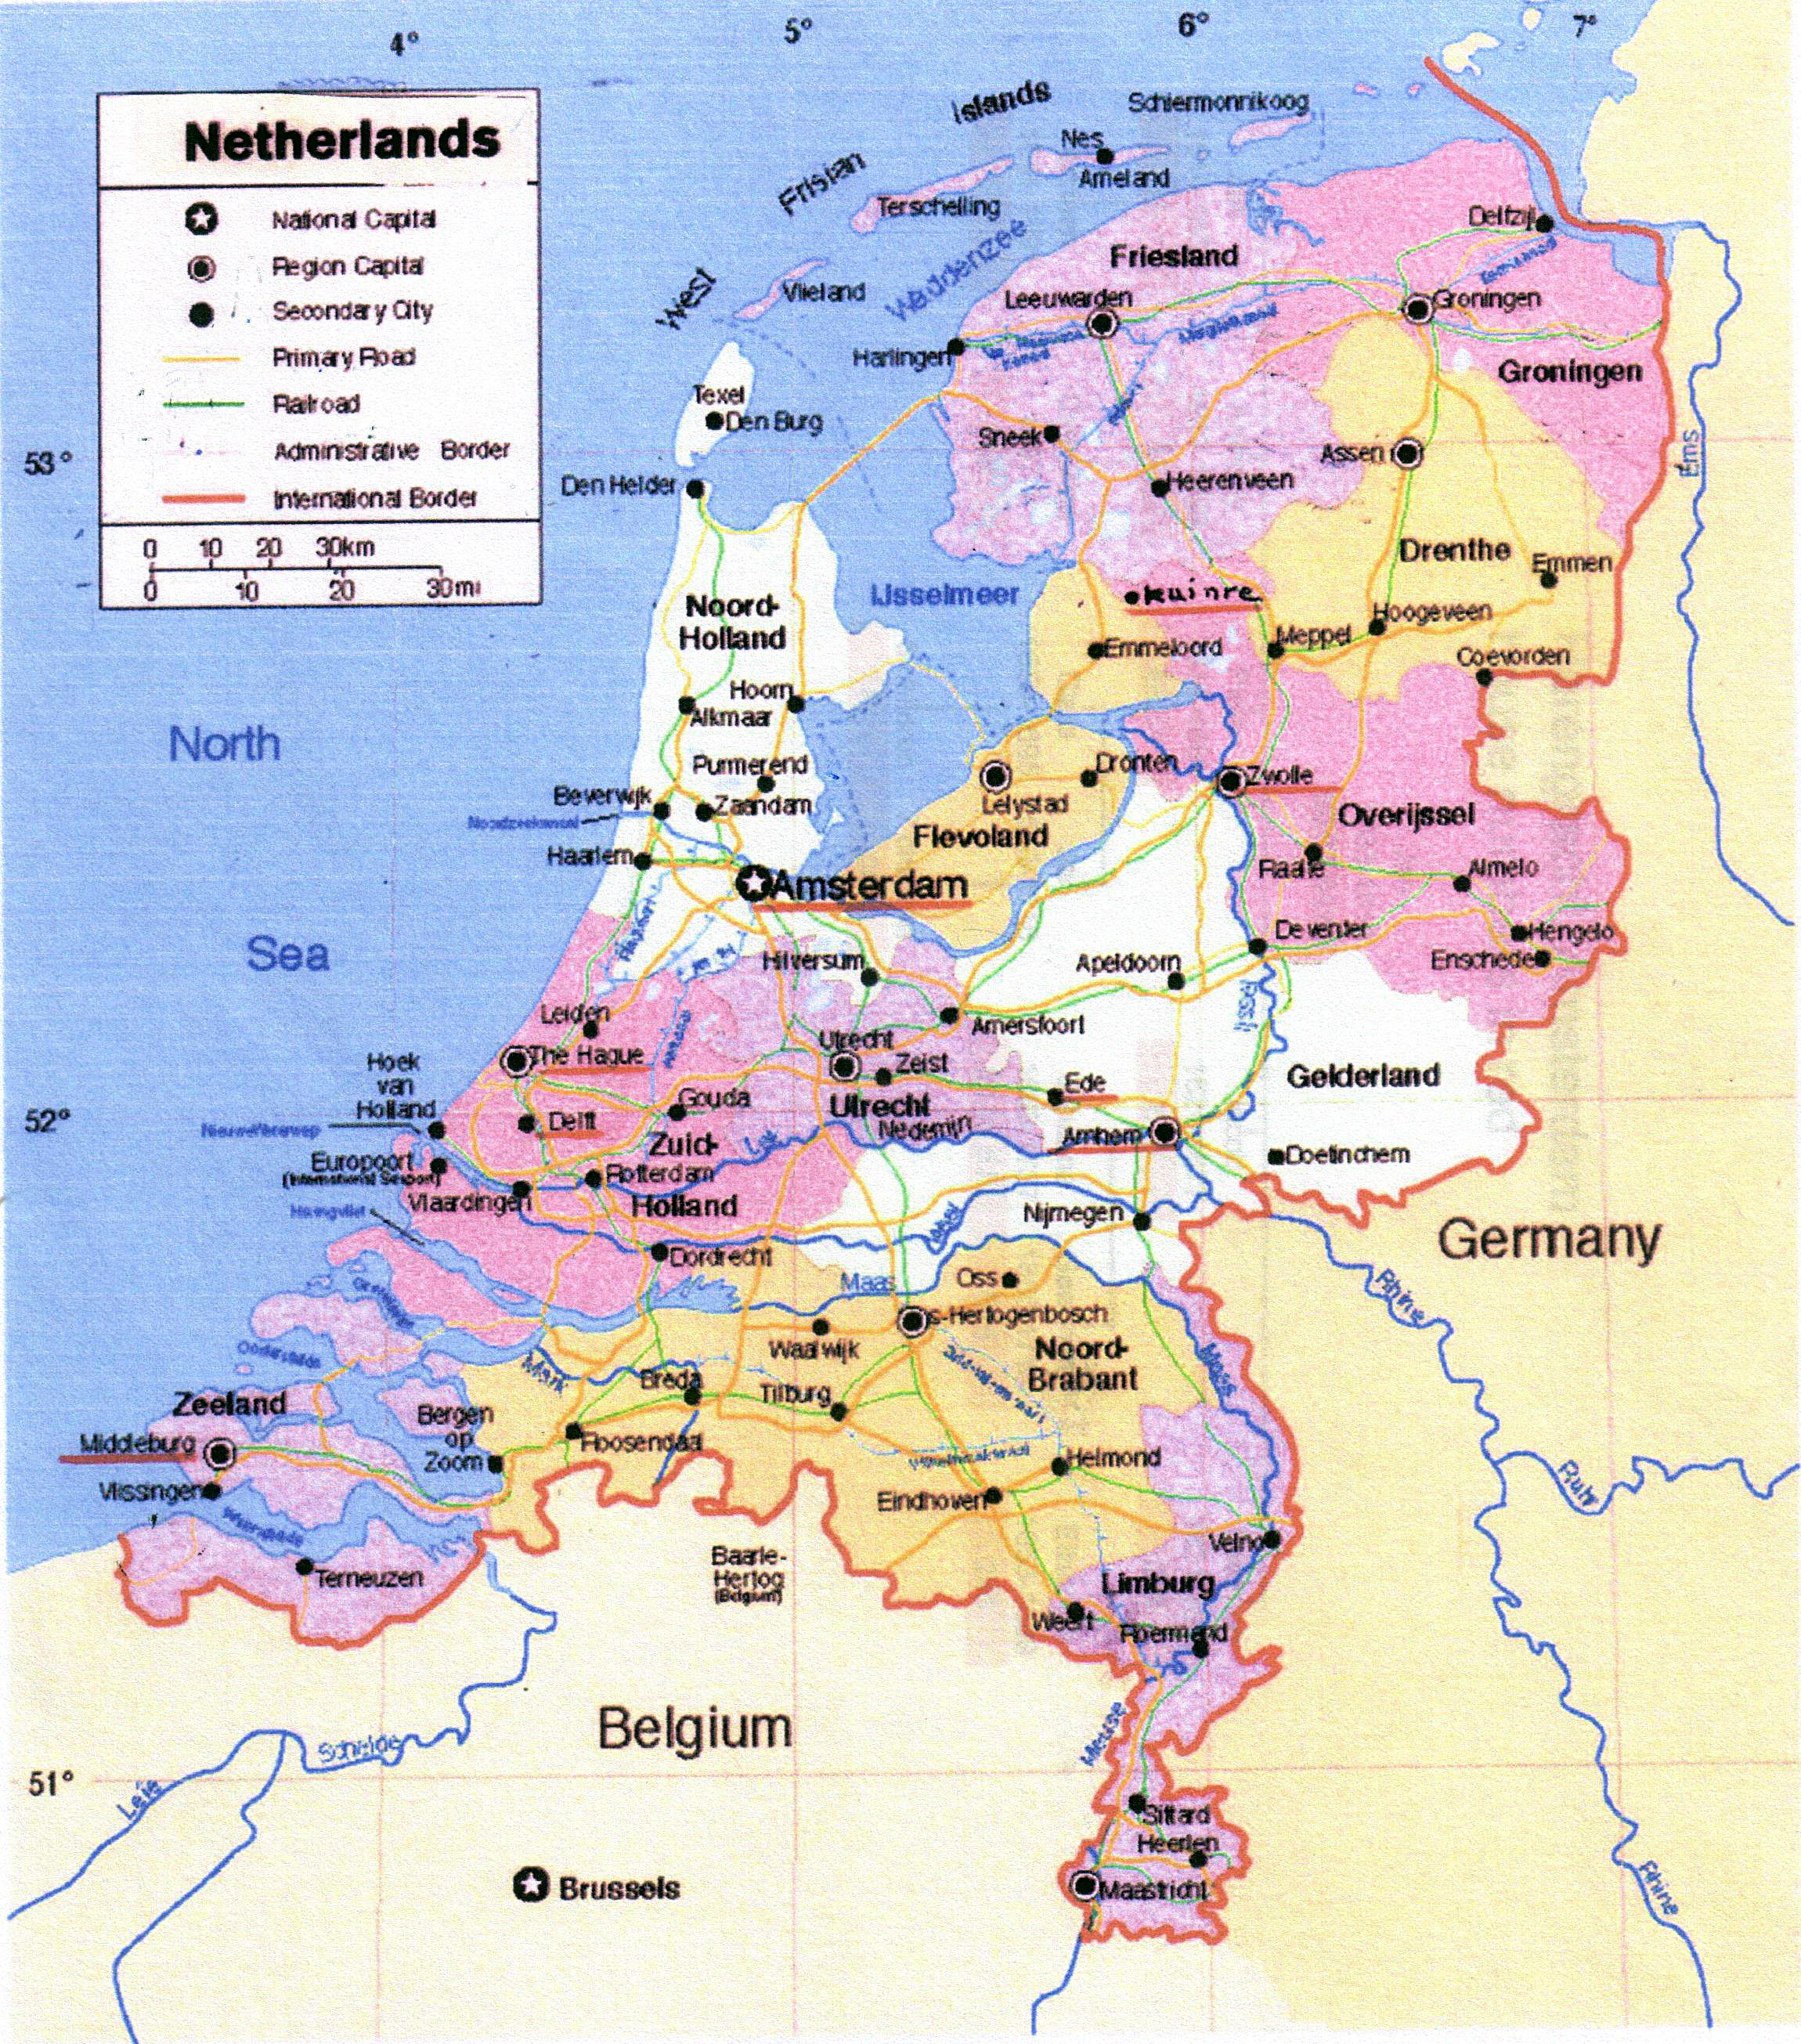 large-political-and-administrative-map-of-netherlands-netherlands-europe-mapsland-maps